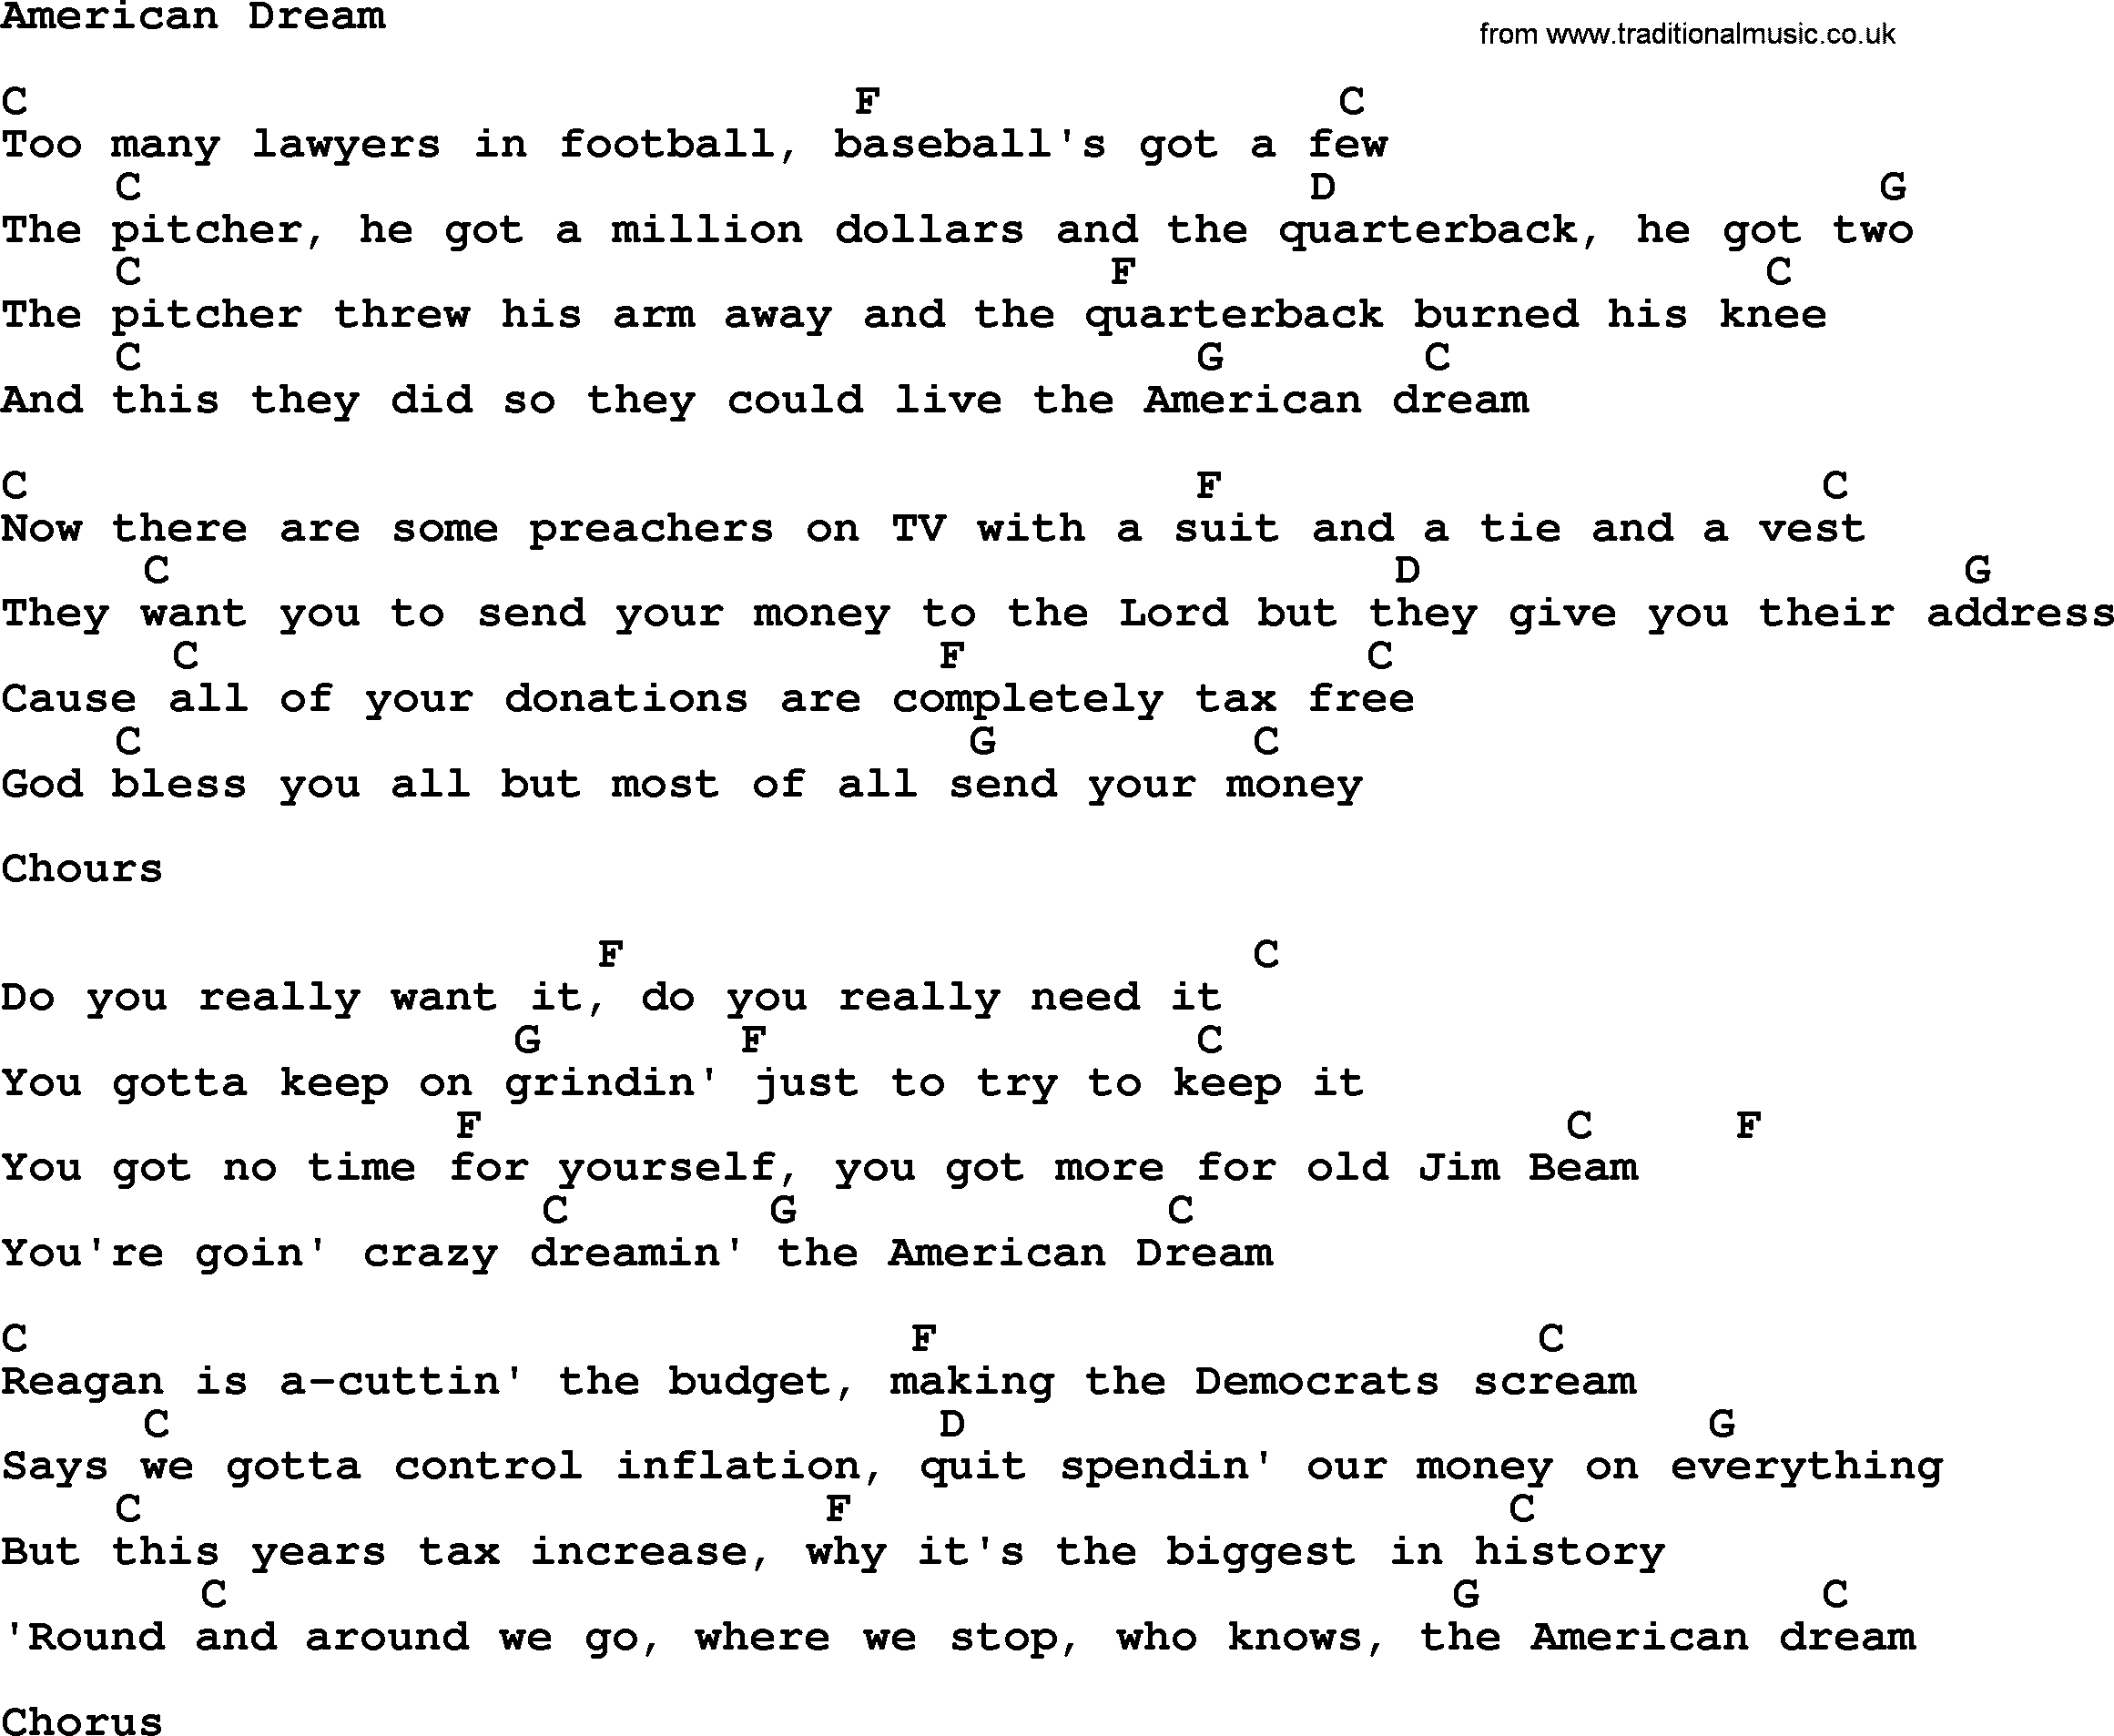 Hank Williams song American Dream, lyrics and chords